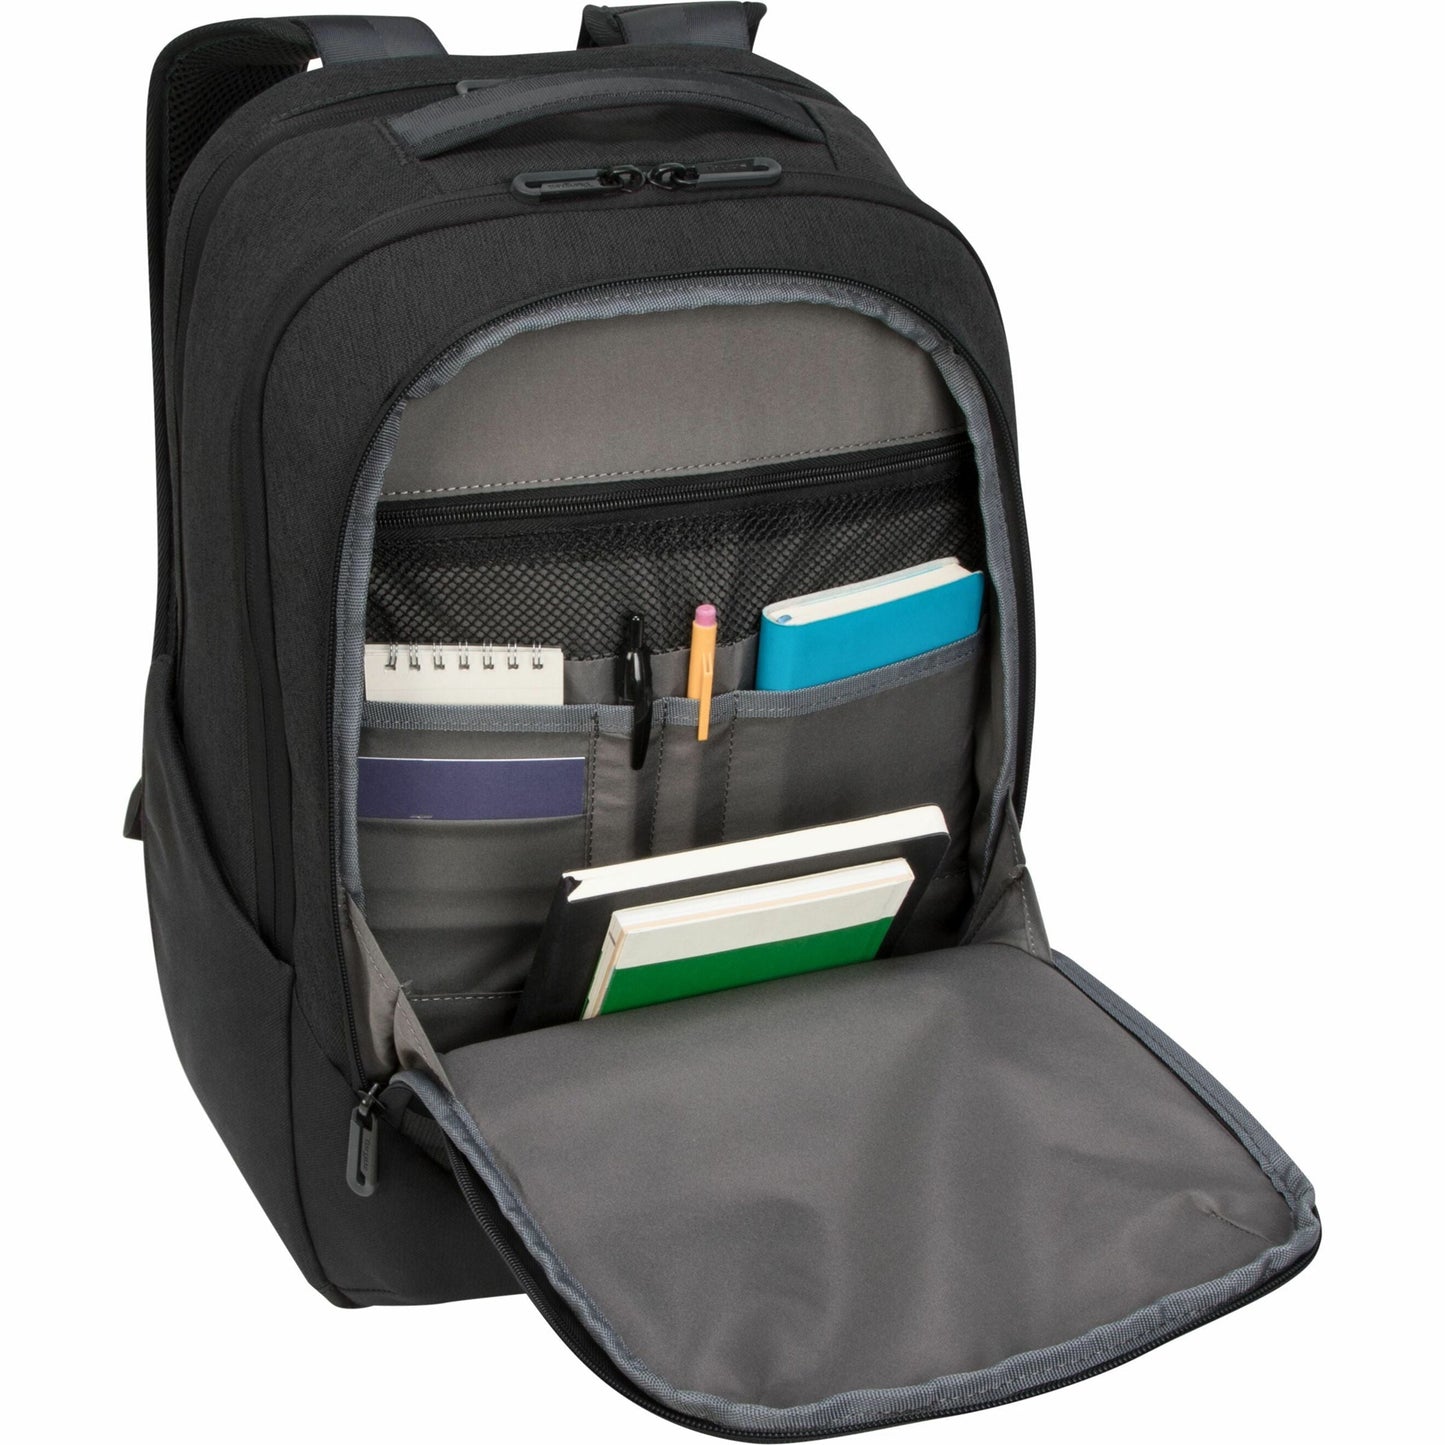 Targus Cypress Hero TBB586GL Carrying Case (Backpack) for 15.6" Notebook - Black